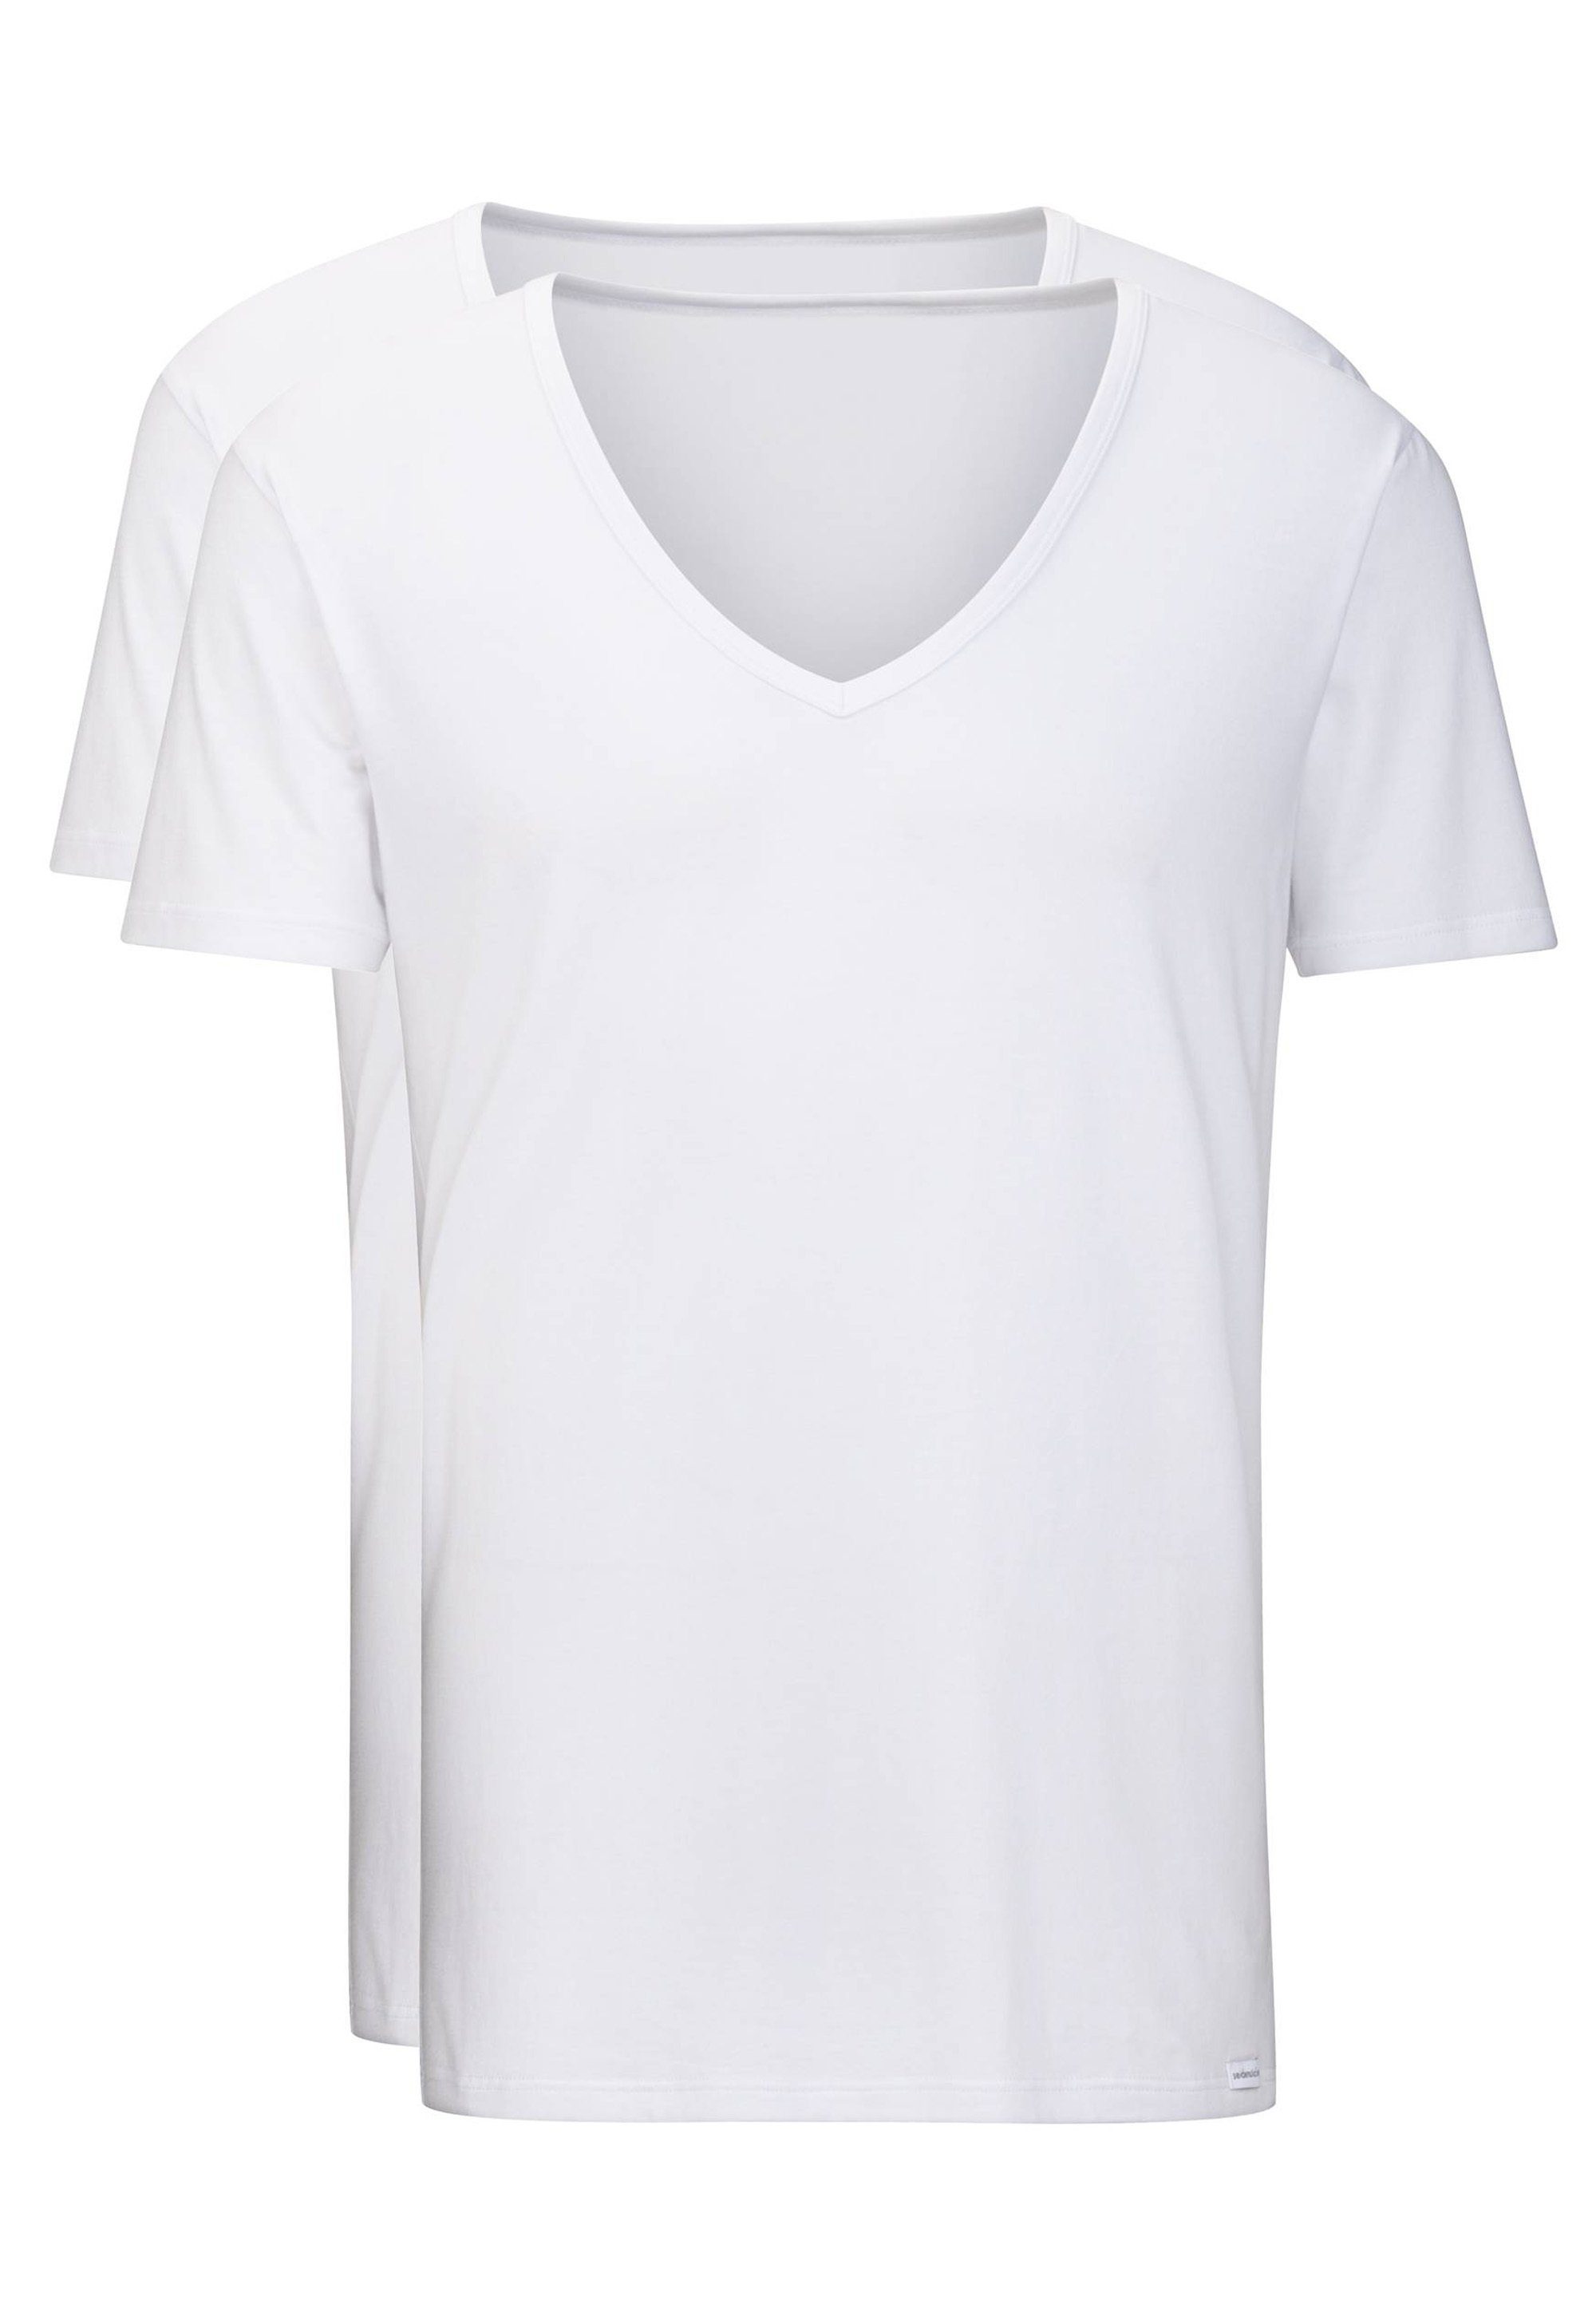 Herren - 2er Unterhemd T-Shirt, Cotton Comfort seidensticker Pack